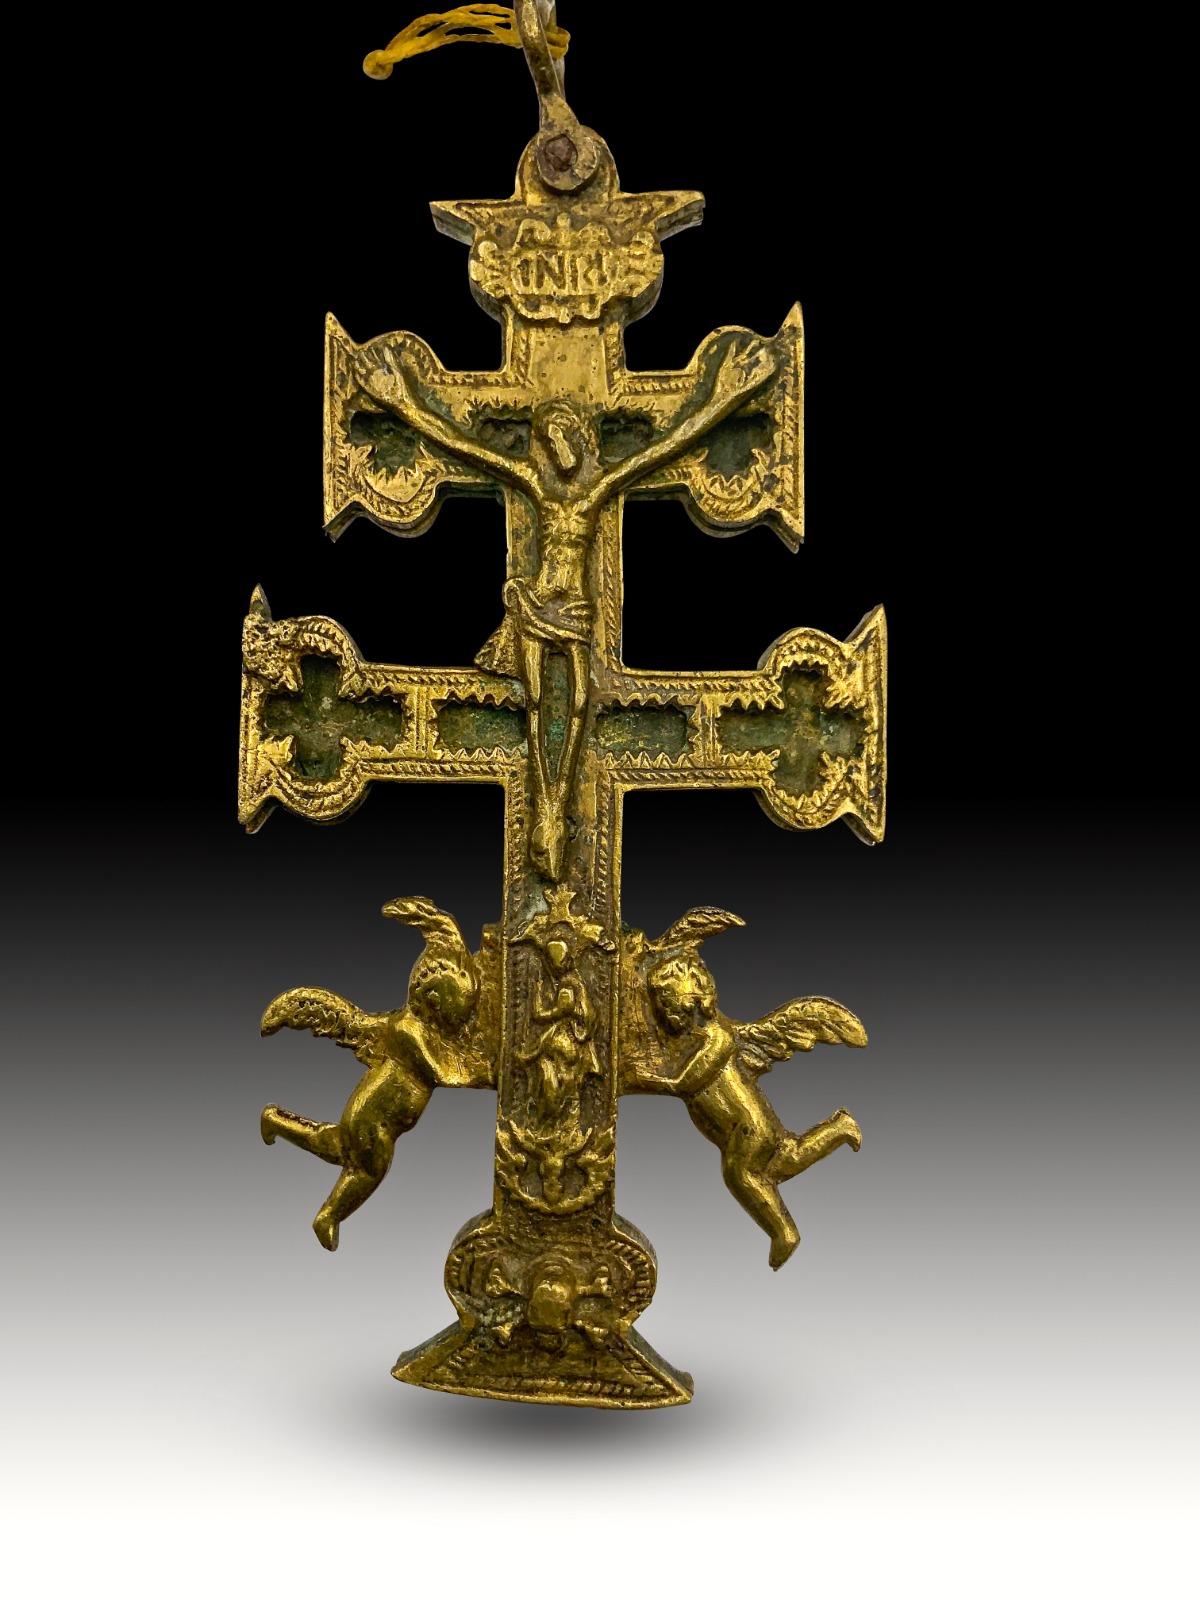 Cross of caravaca XVII century.
Very beautiful cross of caravaca made in bronze. 17th Century. Measurements: 15x6 cm.
Good condition.